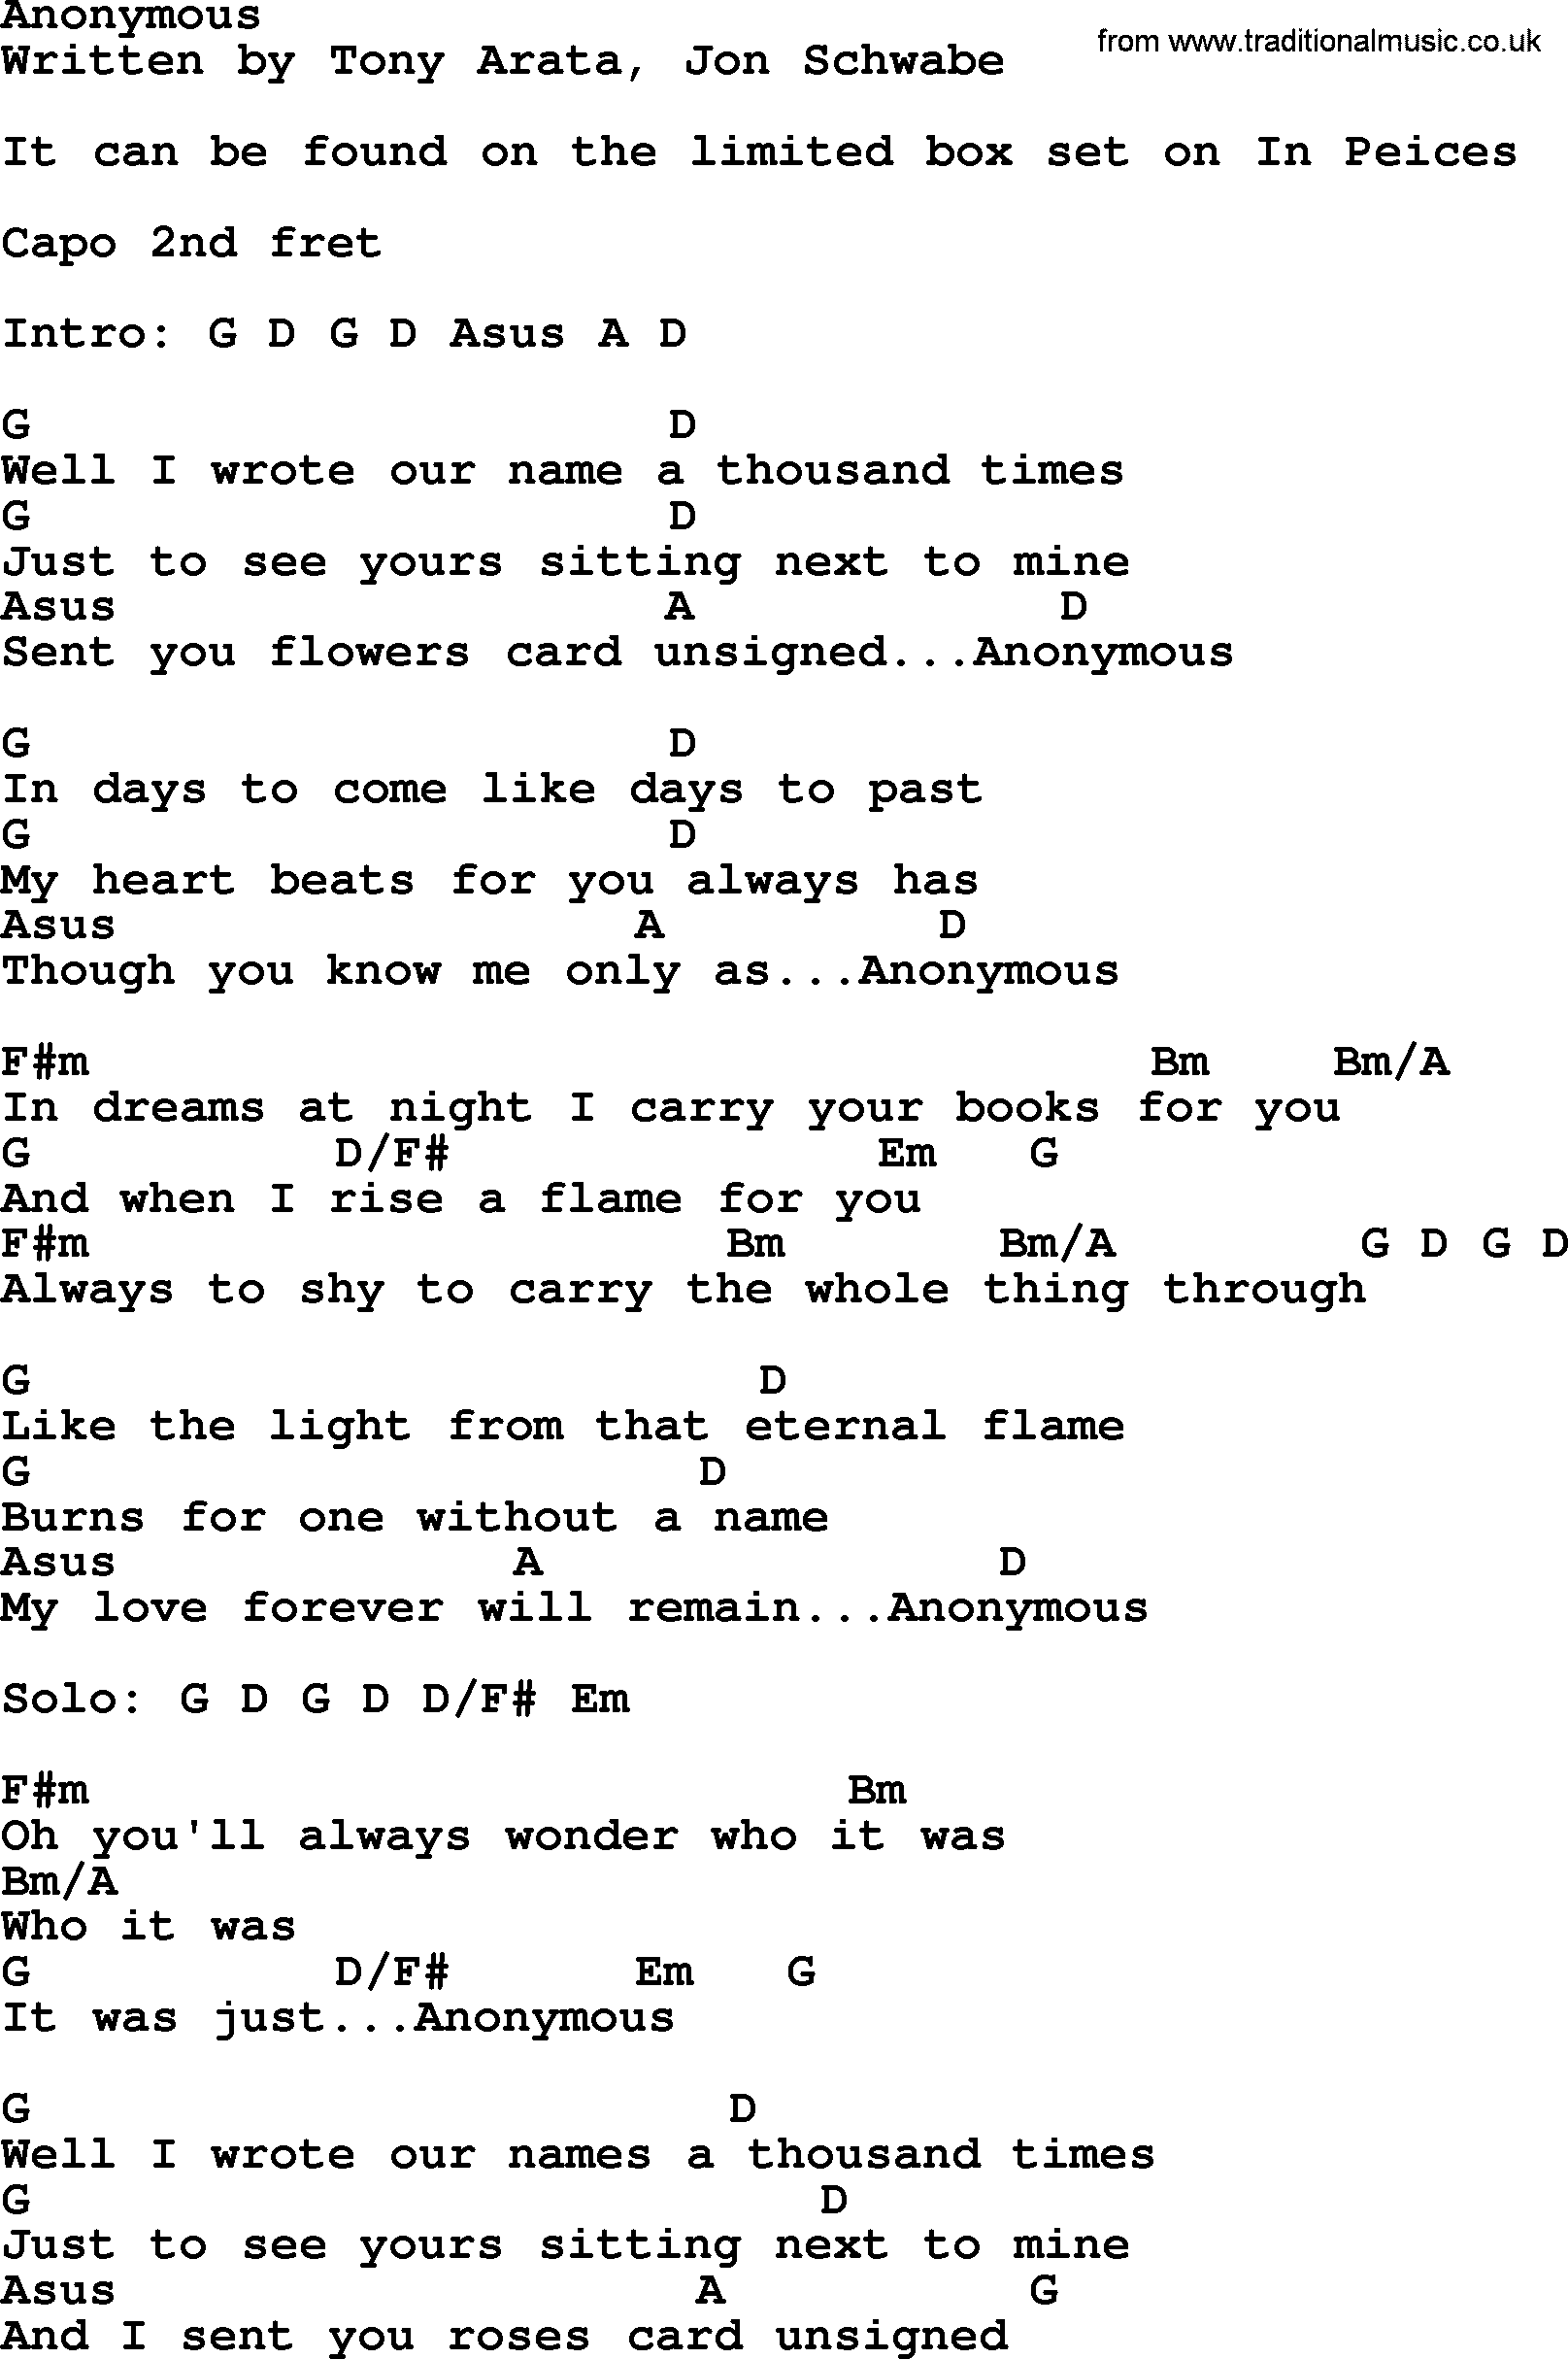 Garth Brooks song: Anonymous, lyrics and chords